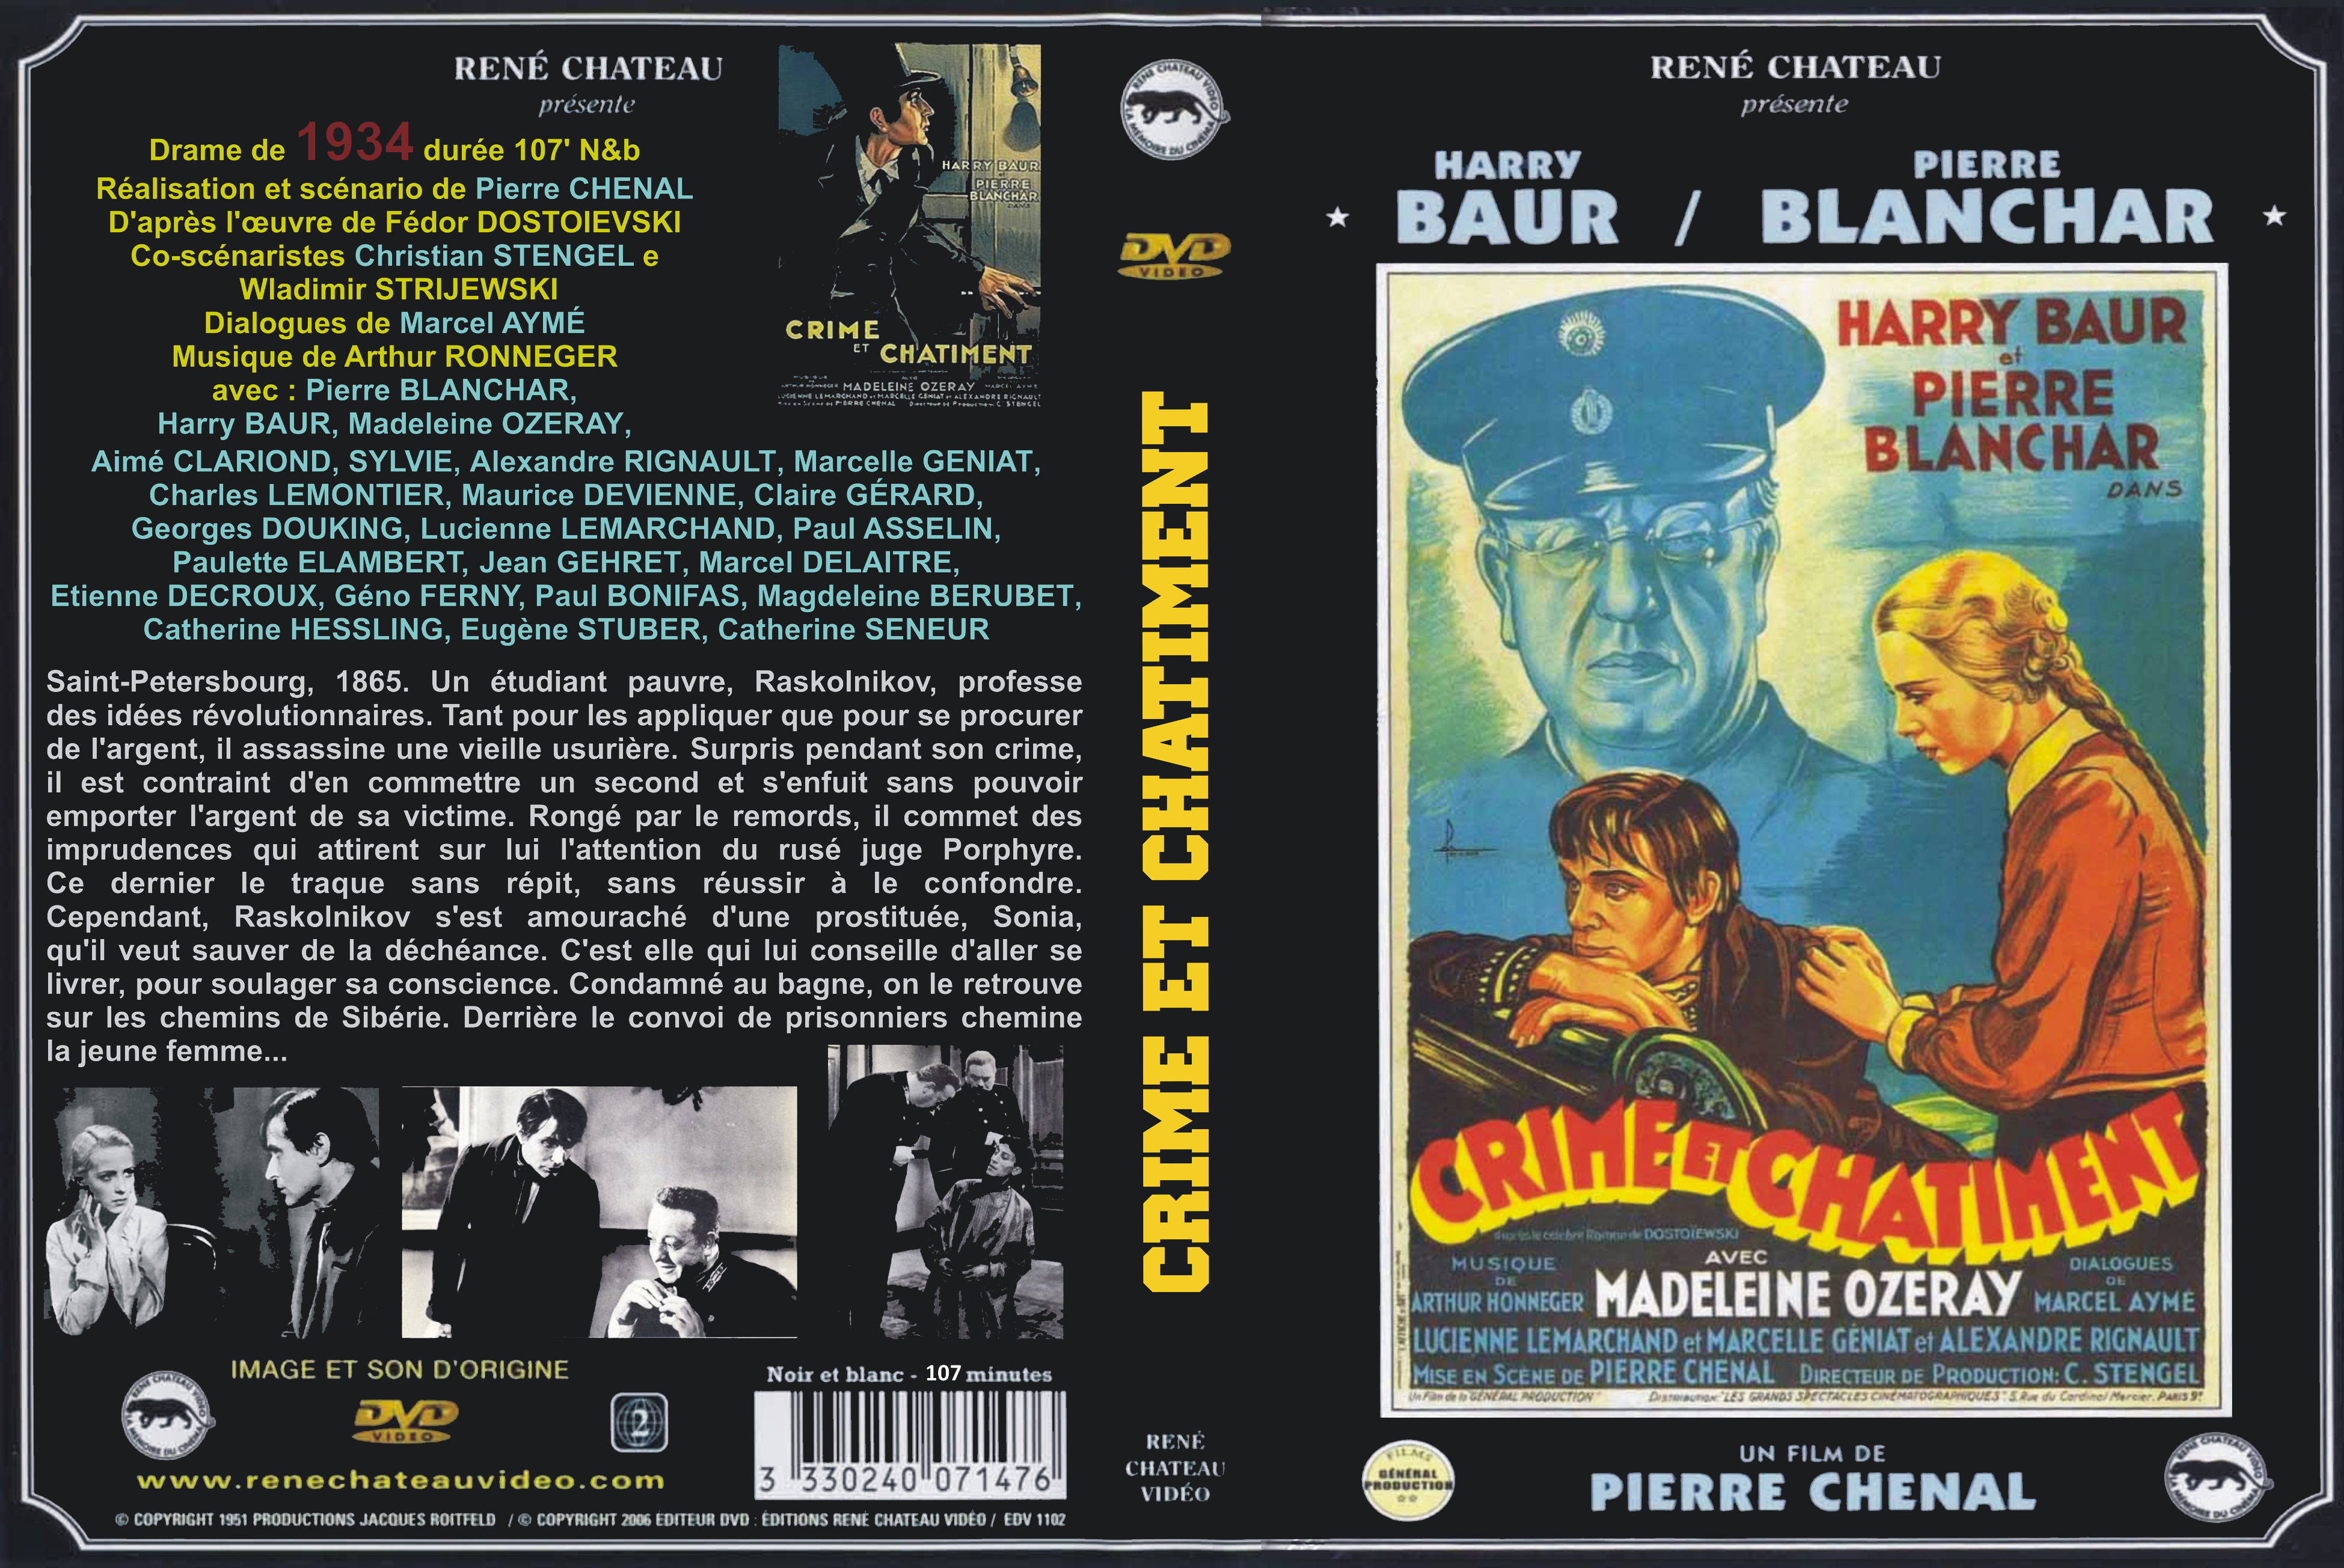 Jaquette DVD Crime et chatiment (1934) custom